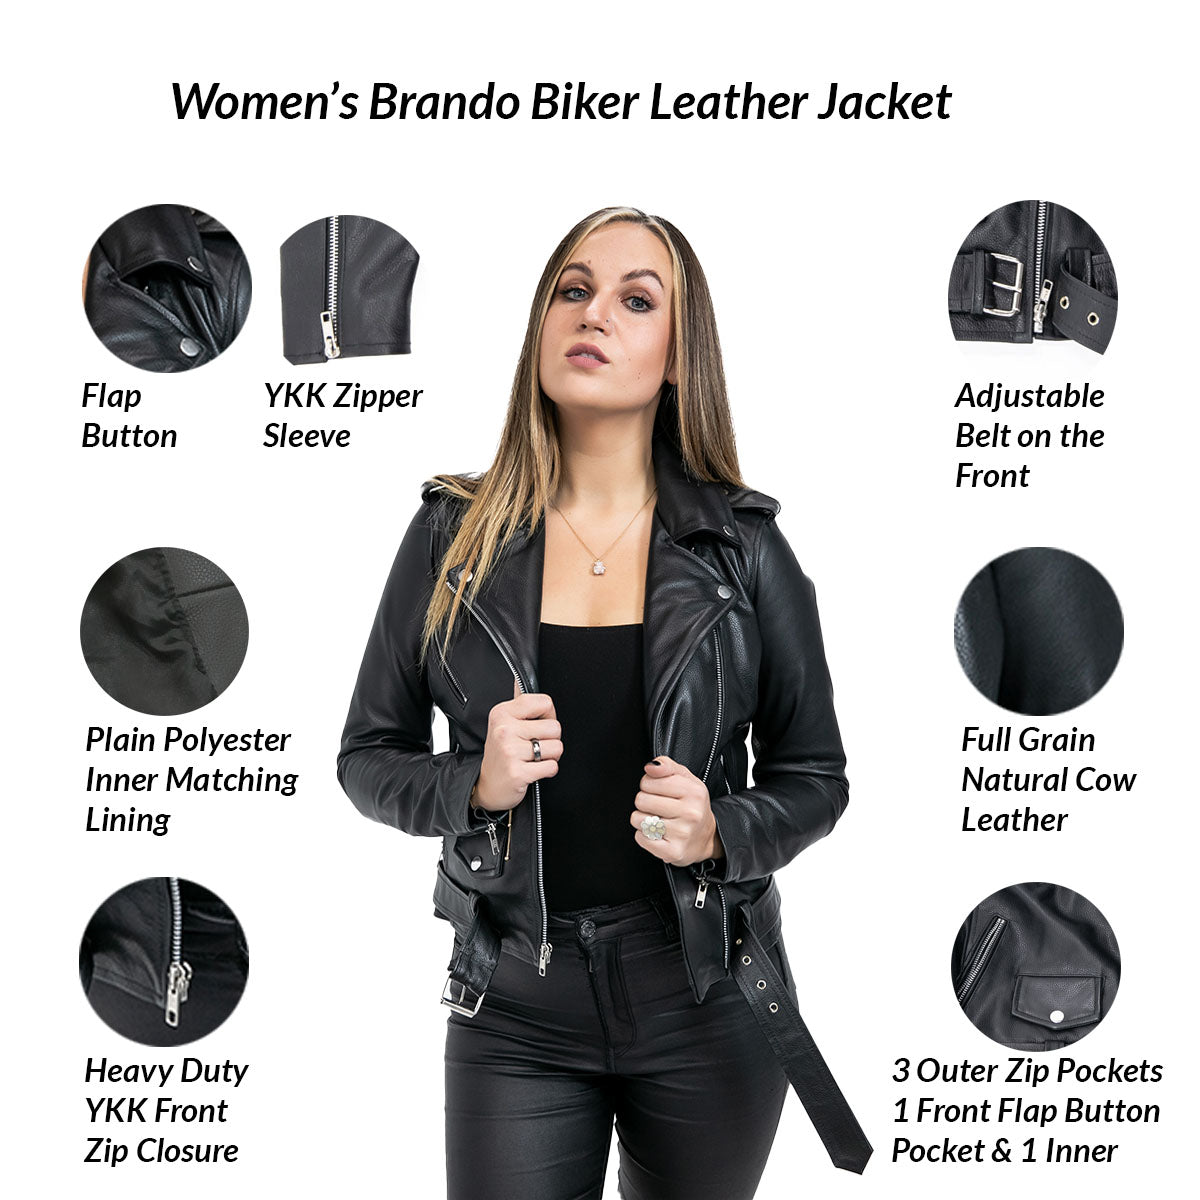 Perfecto Biker Black Leather Jacket Marlon Brando Style